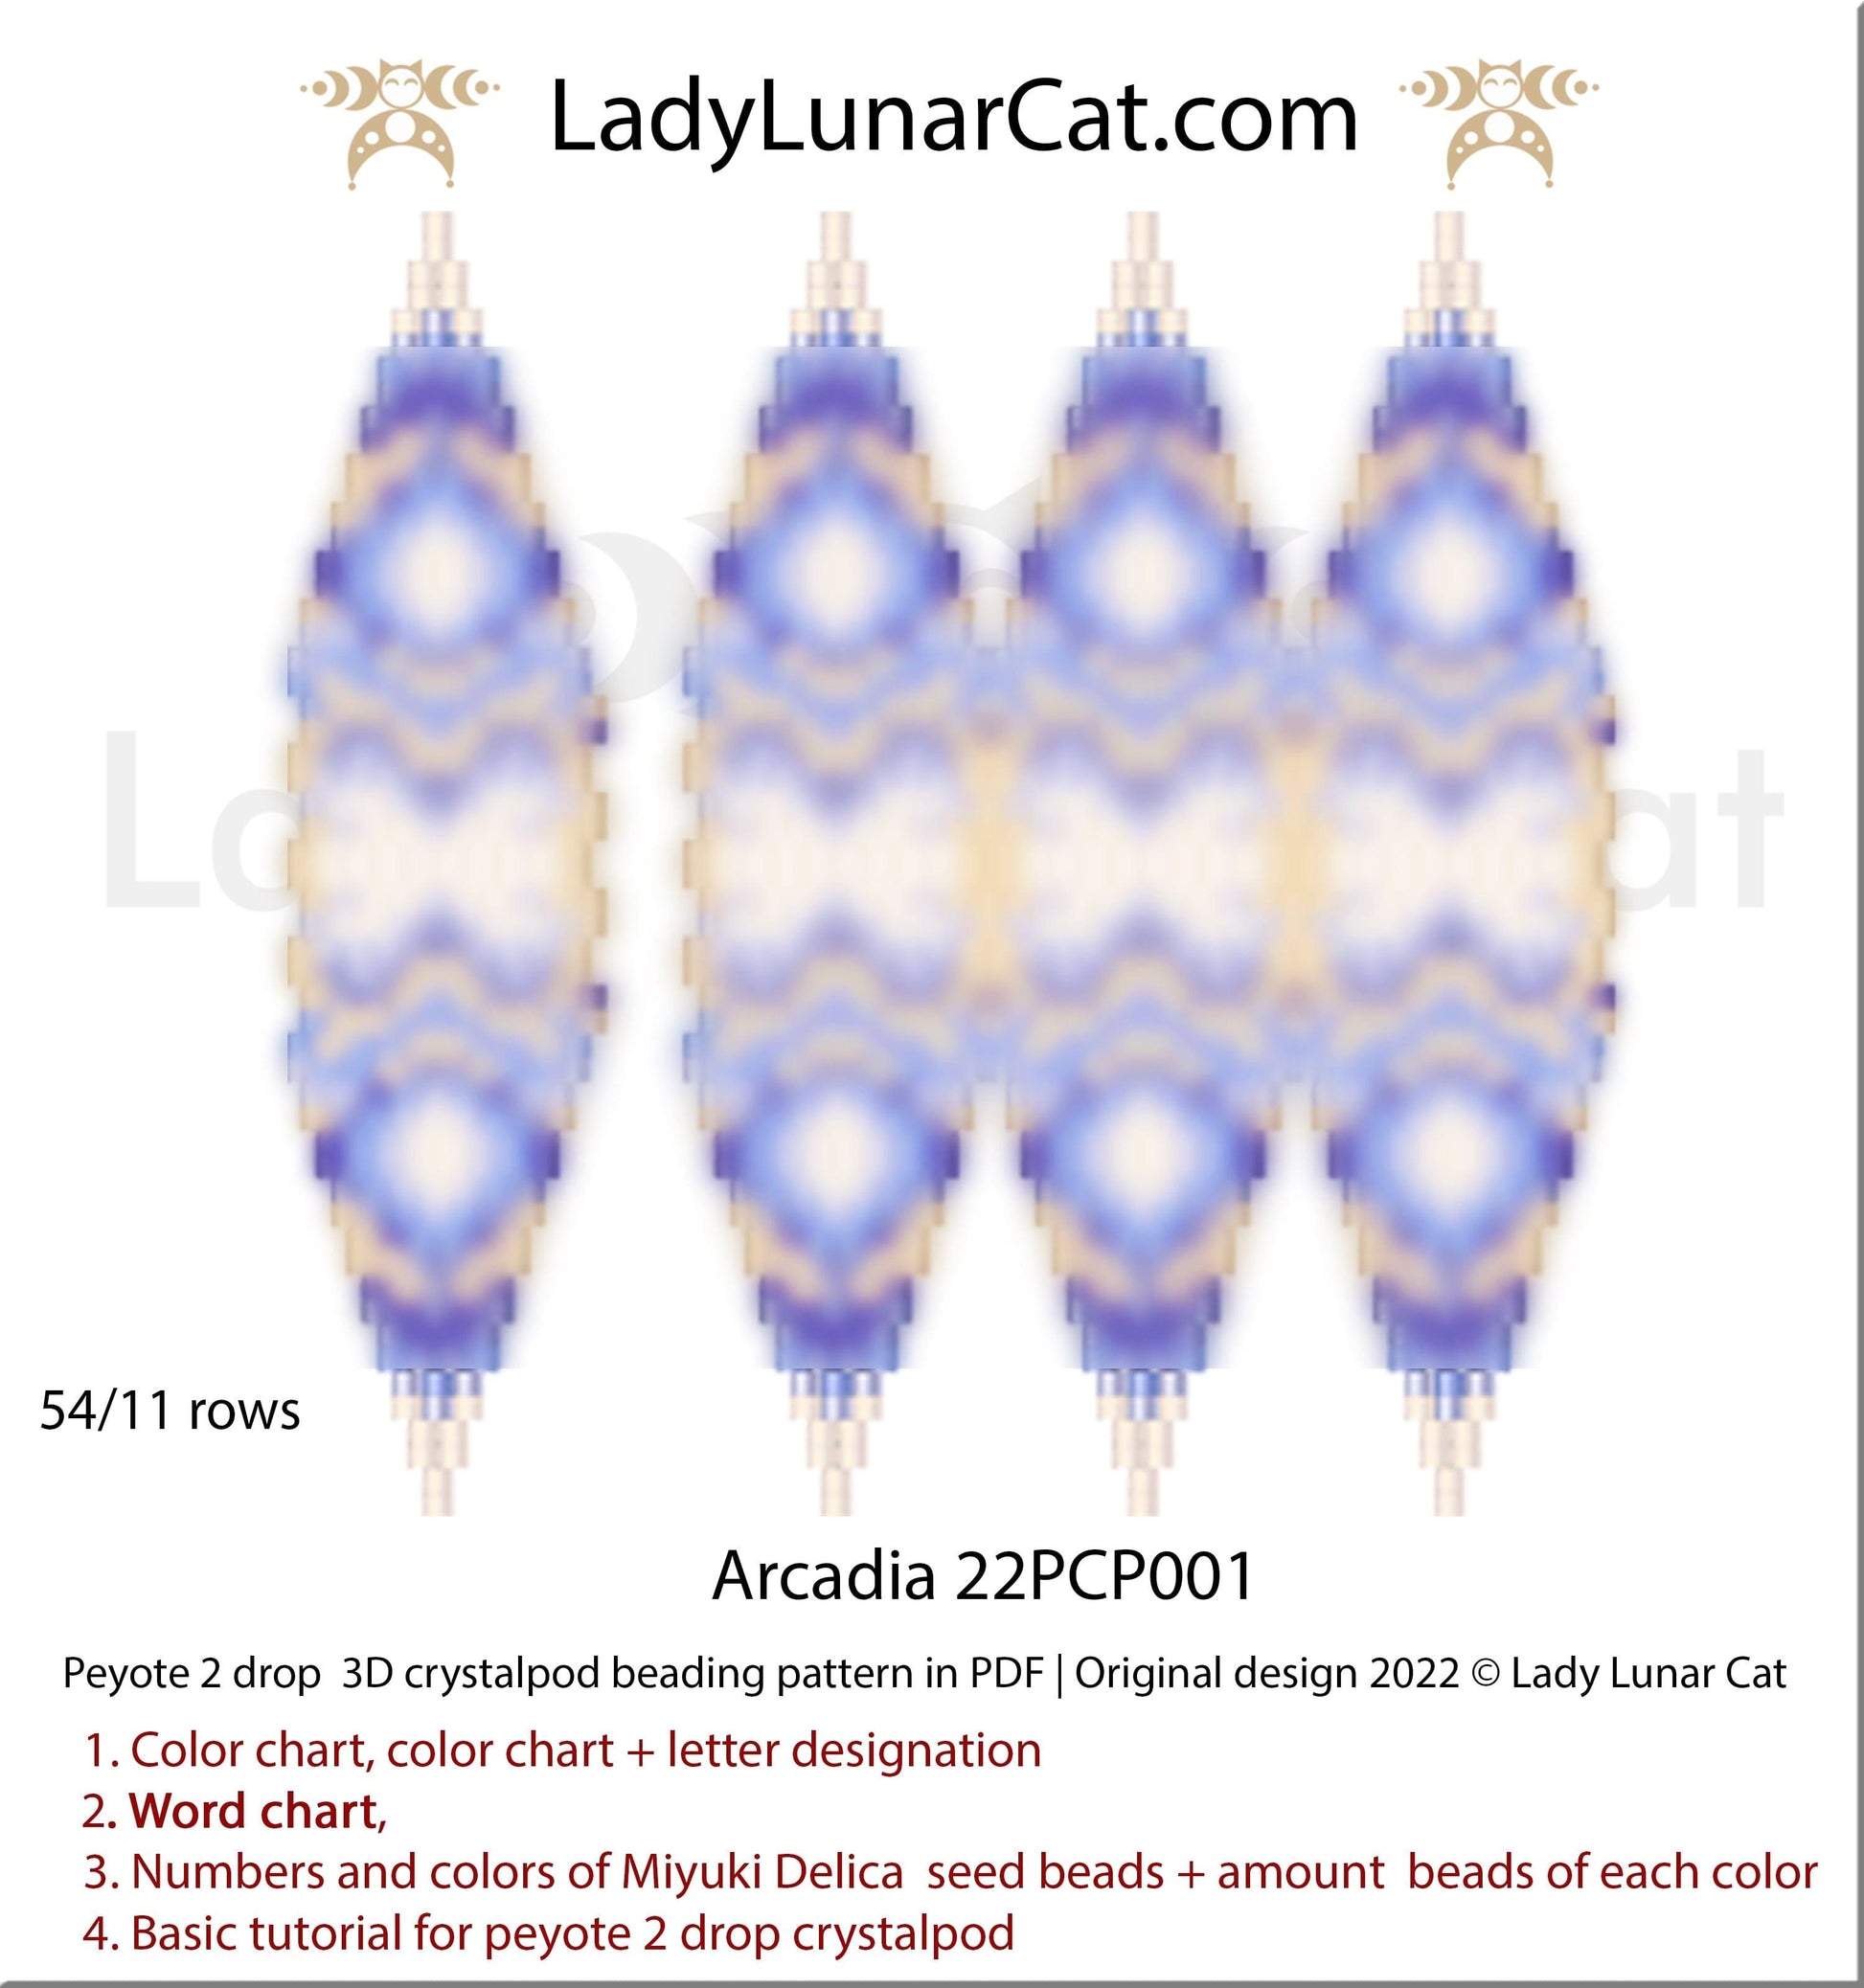 Peyote 2drop pod pattern or crystalpod pattern for beading  Arcadia 22PCP001 LadyLunarCat